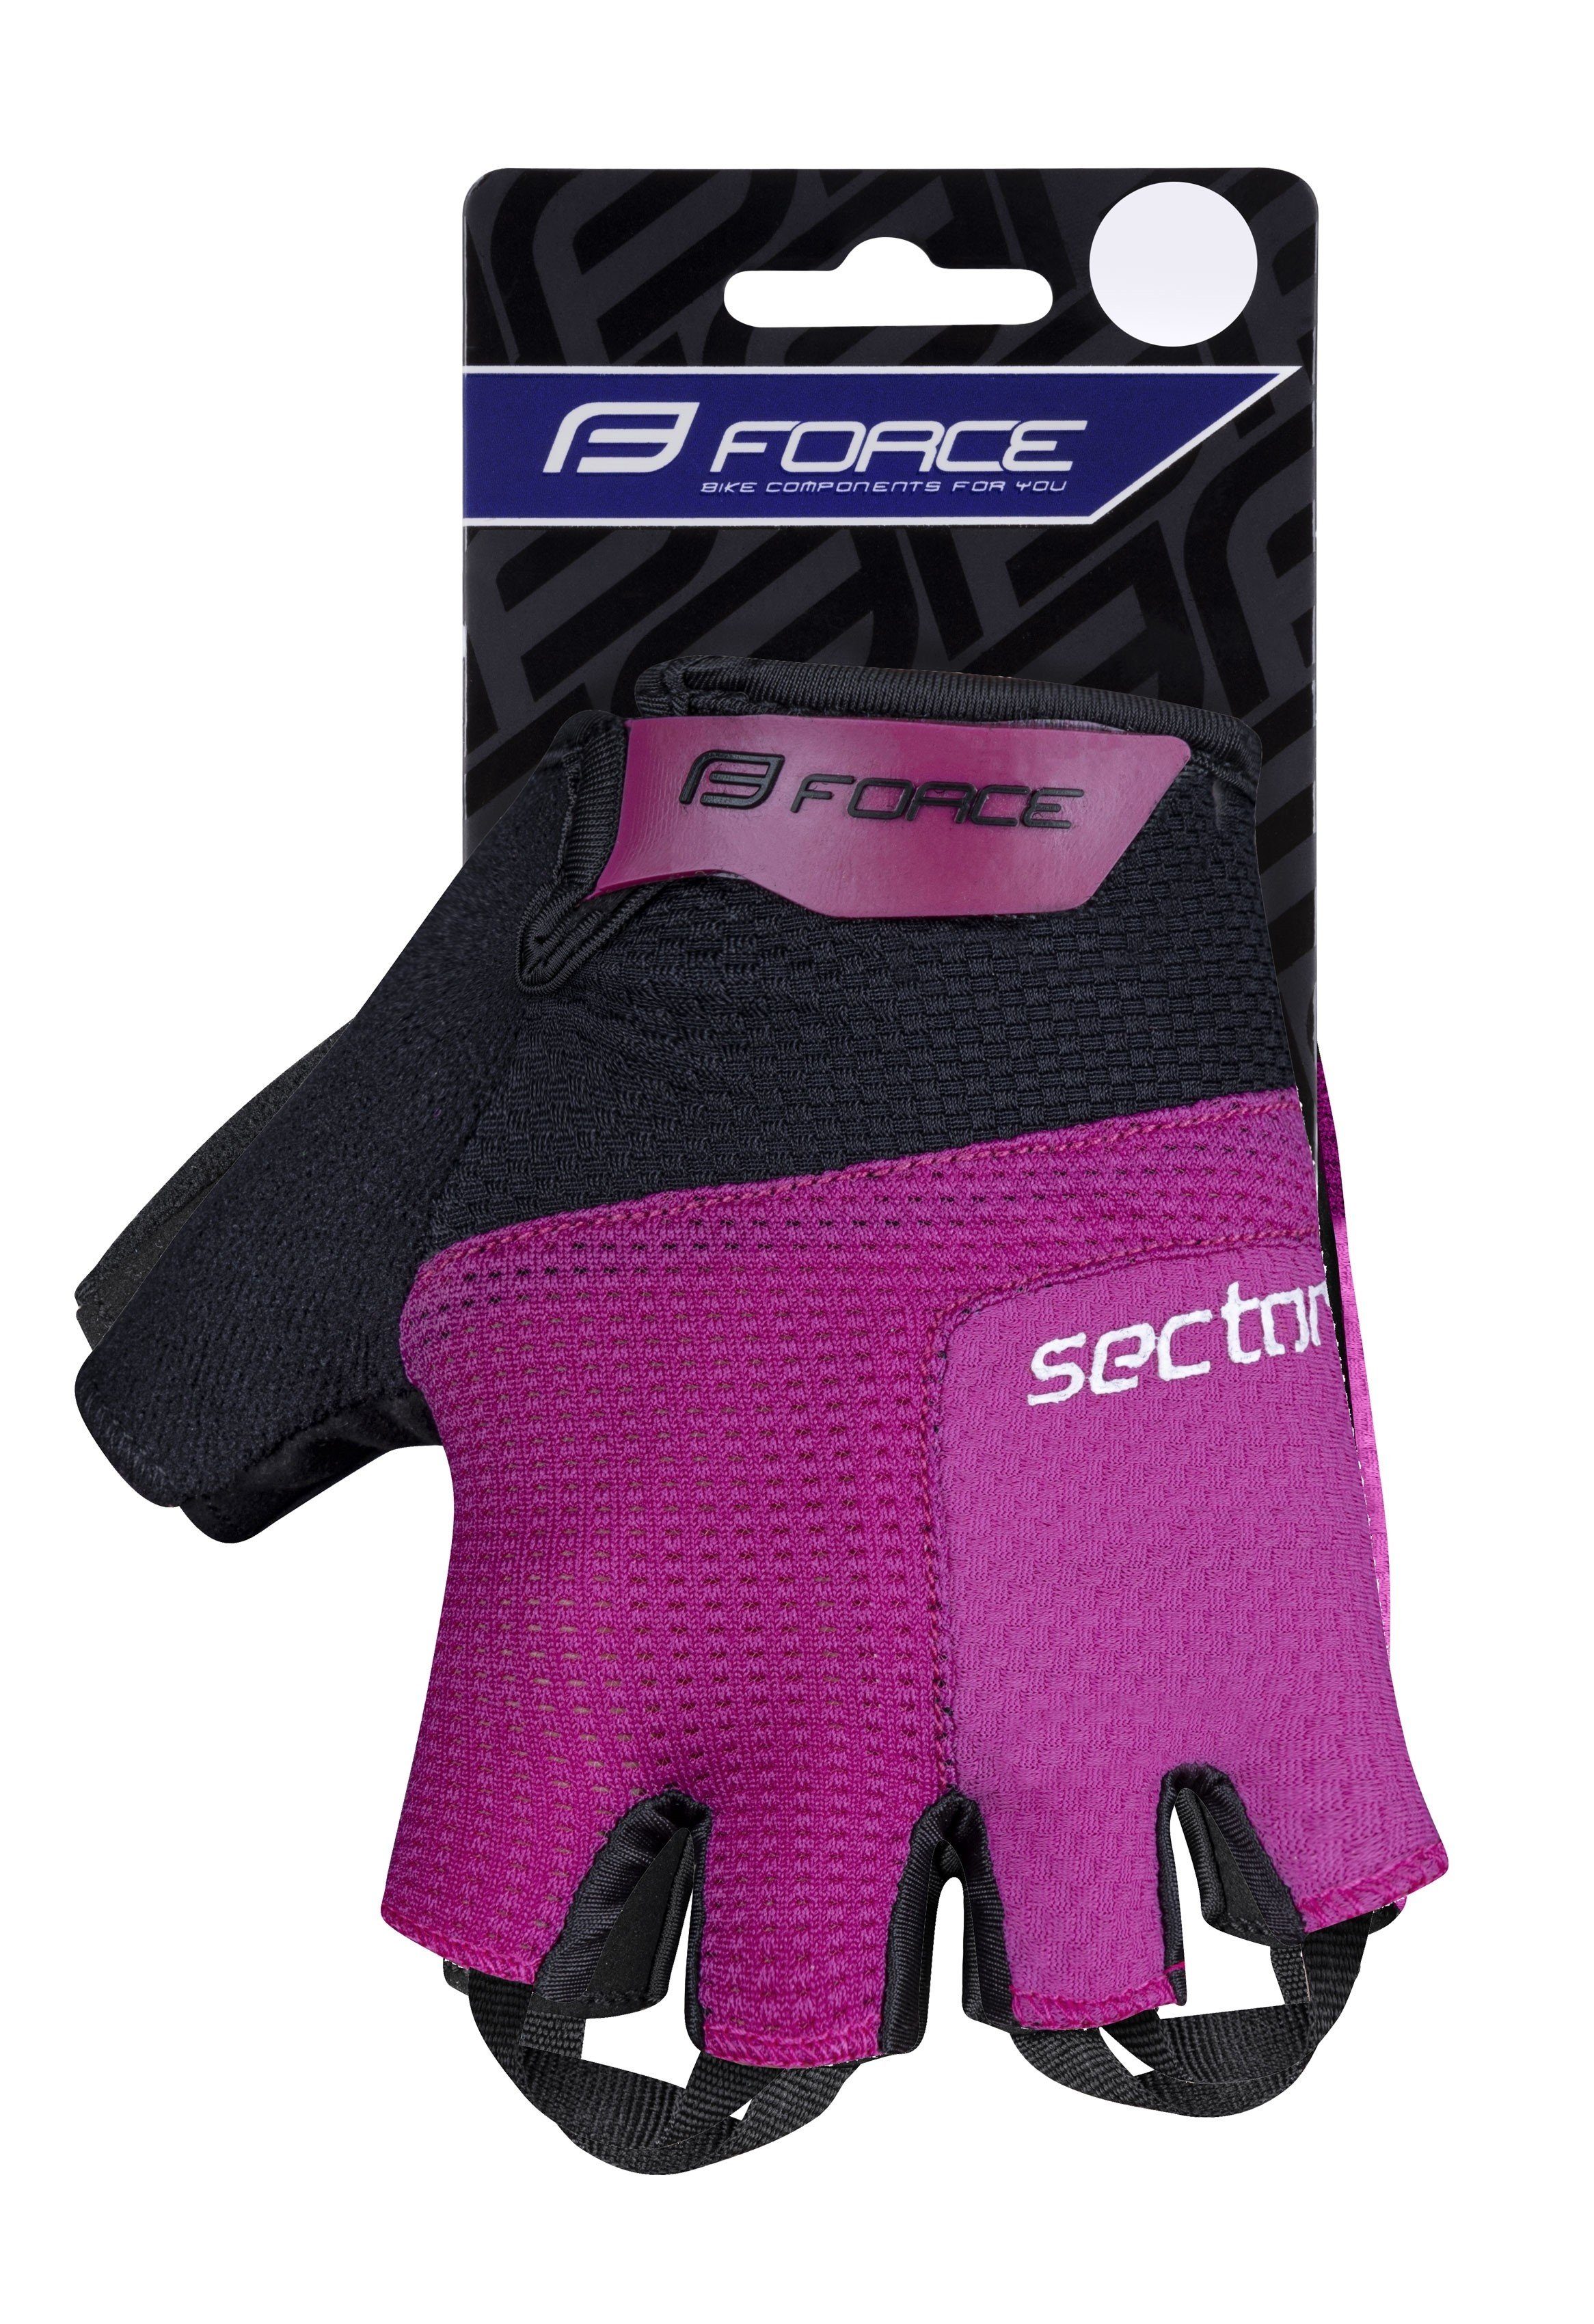 LADY Handschuhe FORCE Fahrradhandschuhe SECTOR FORCE pink-schwarz